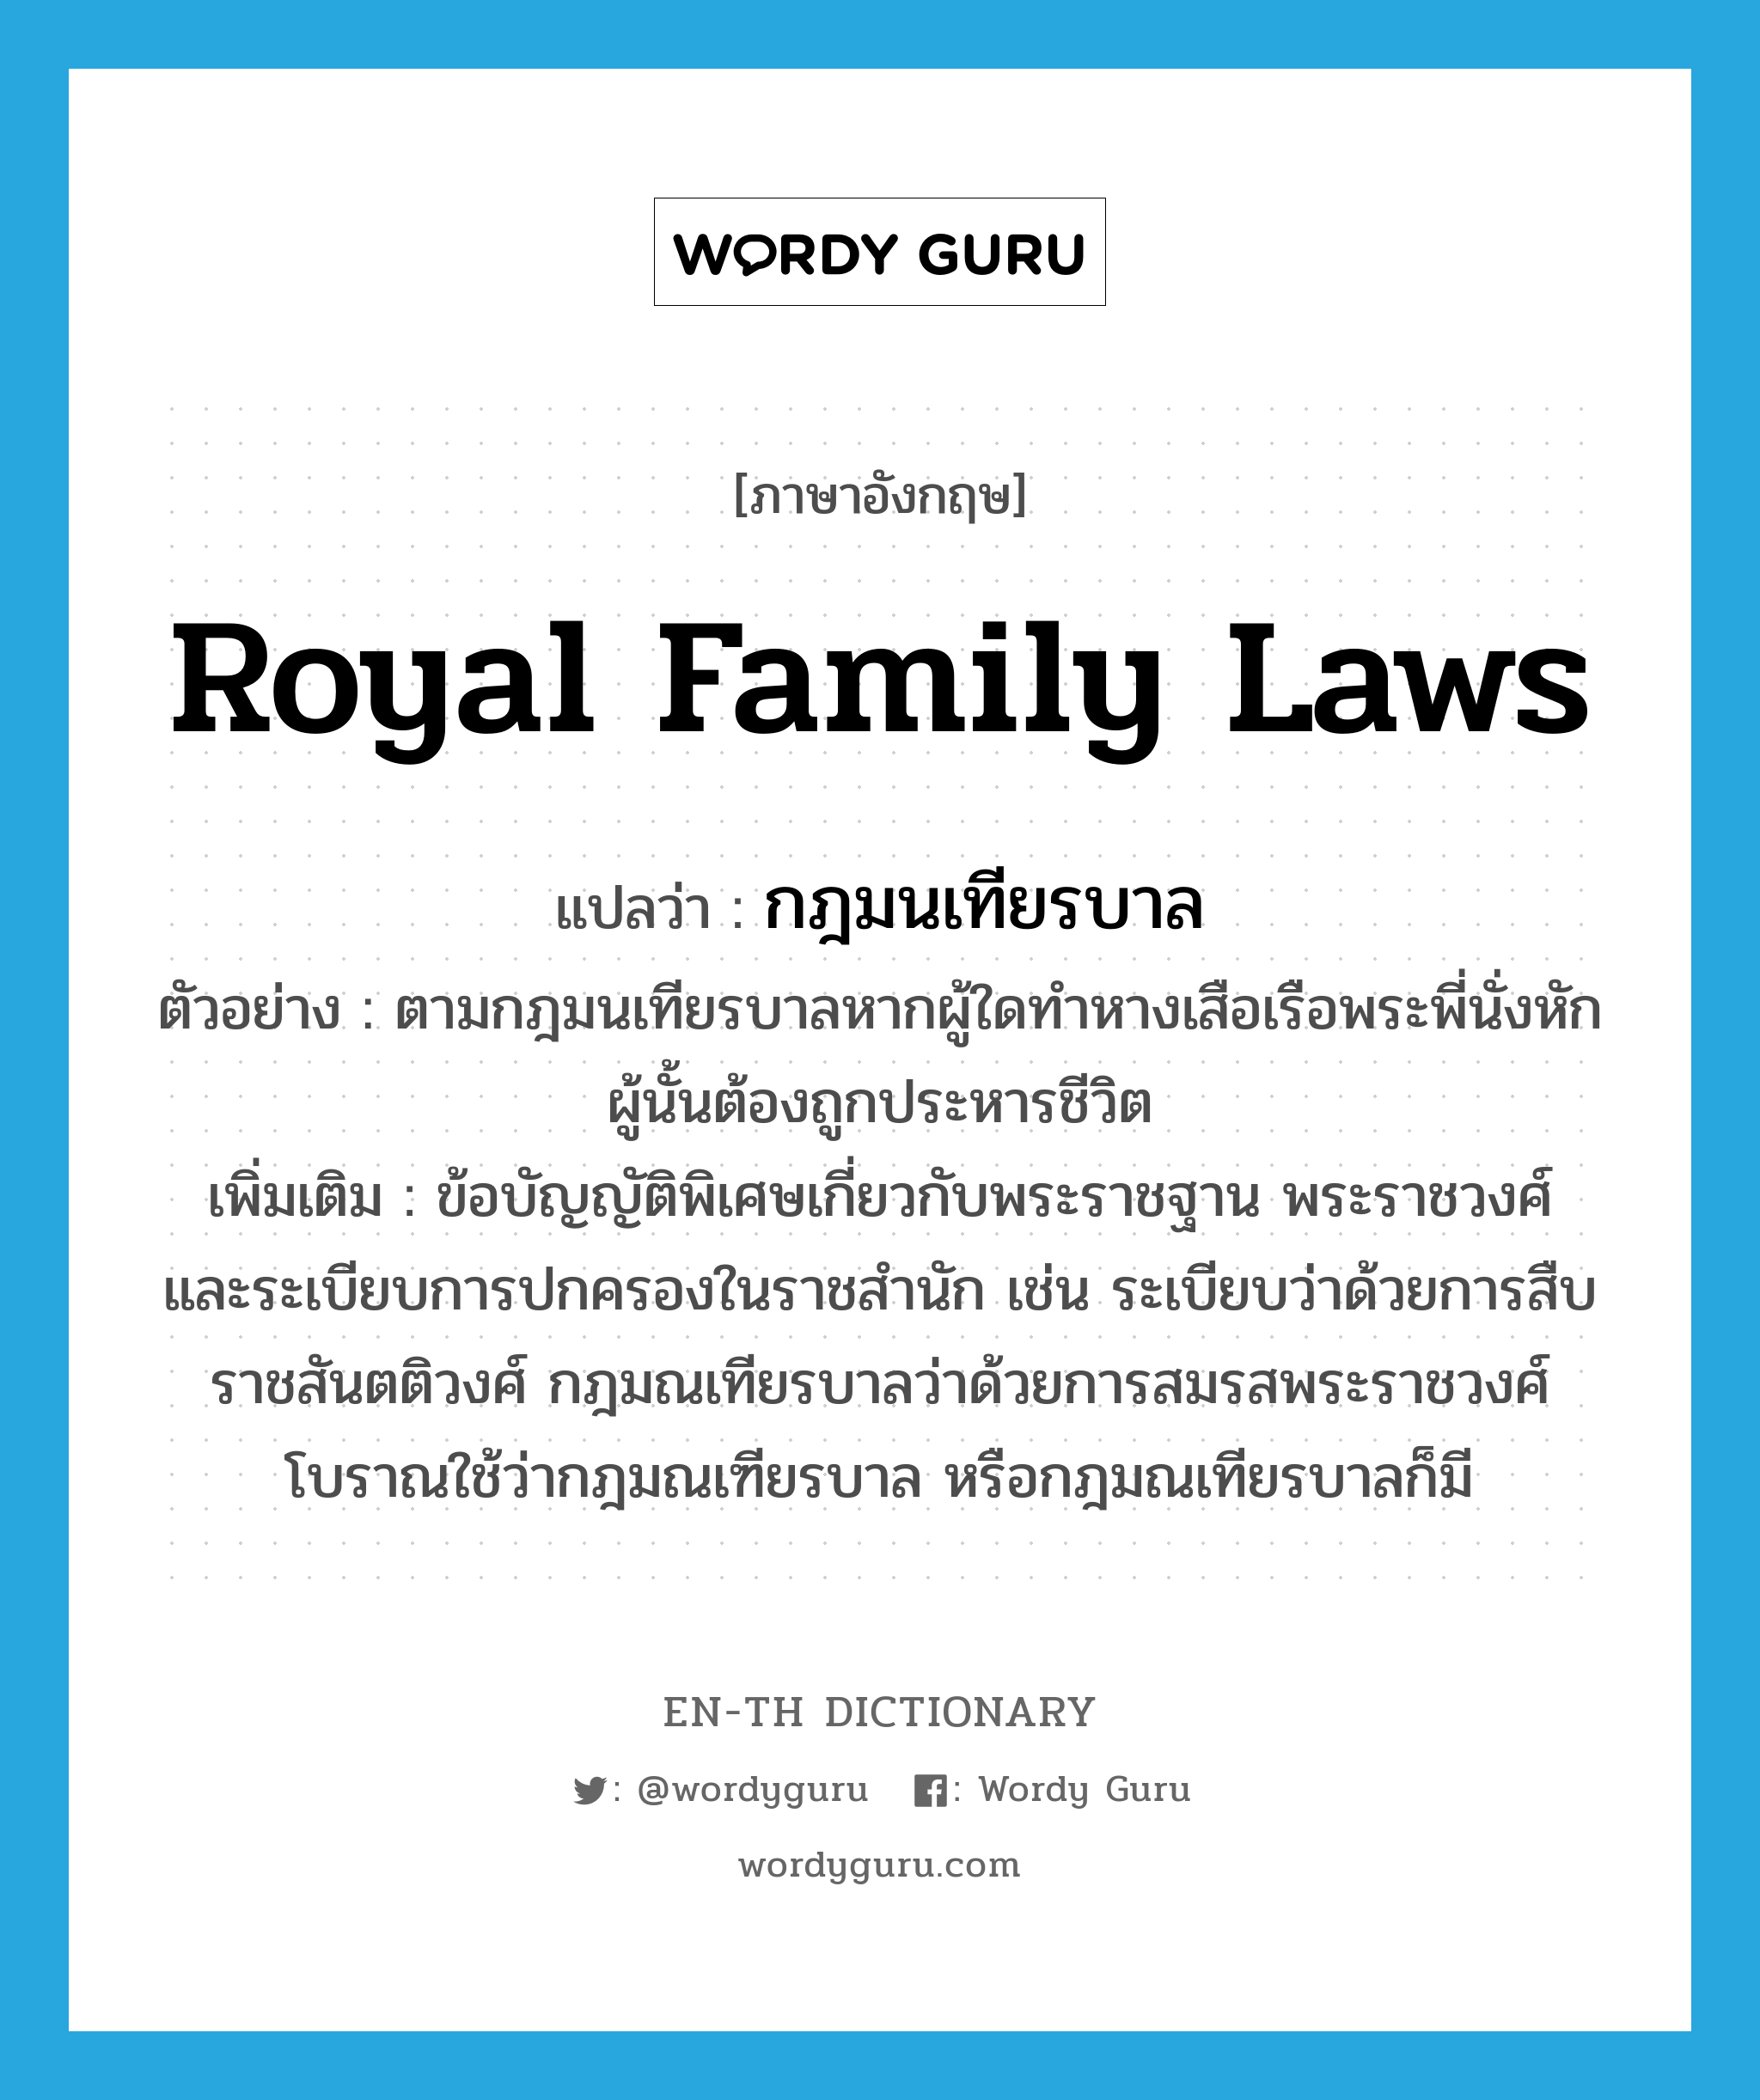 royal family laws แปลว่า?, คำศัพท์ภาษาอังกฤษ royal family laws แปลว่า กฎมนเทียรบาล ประเภท N ตัวอย่าง ตามกฎมนเทียรบาลหากผู้ใดทำหางเสือเรือพระพี่นั่งหักผู้นั้นต้องถูกประหารชีวิต เพิ่มเติม ข้อบัญญัติพิเศษเกี่ยวกับพระราชฐาน พระราชวงศ์ และระเบียบการปกครองในราชสำนัก เช่น ระเบียบว่าด้วยการสืบราชสันตติวงศ์ กฎมณเทียรบาลว่าด้วยการสมรสพระราชวงศ์ โบราณใช้ว่ากฎมณเฑียรบาล หรือกฎมณเทียรบาลก็มี หมวด N